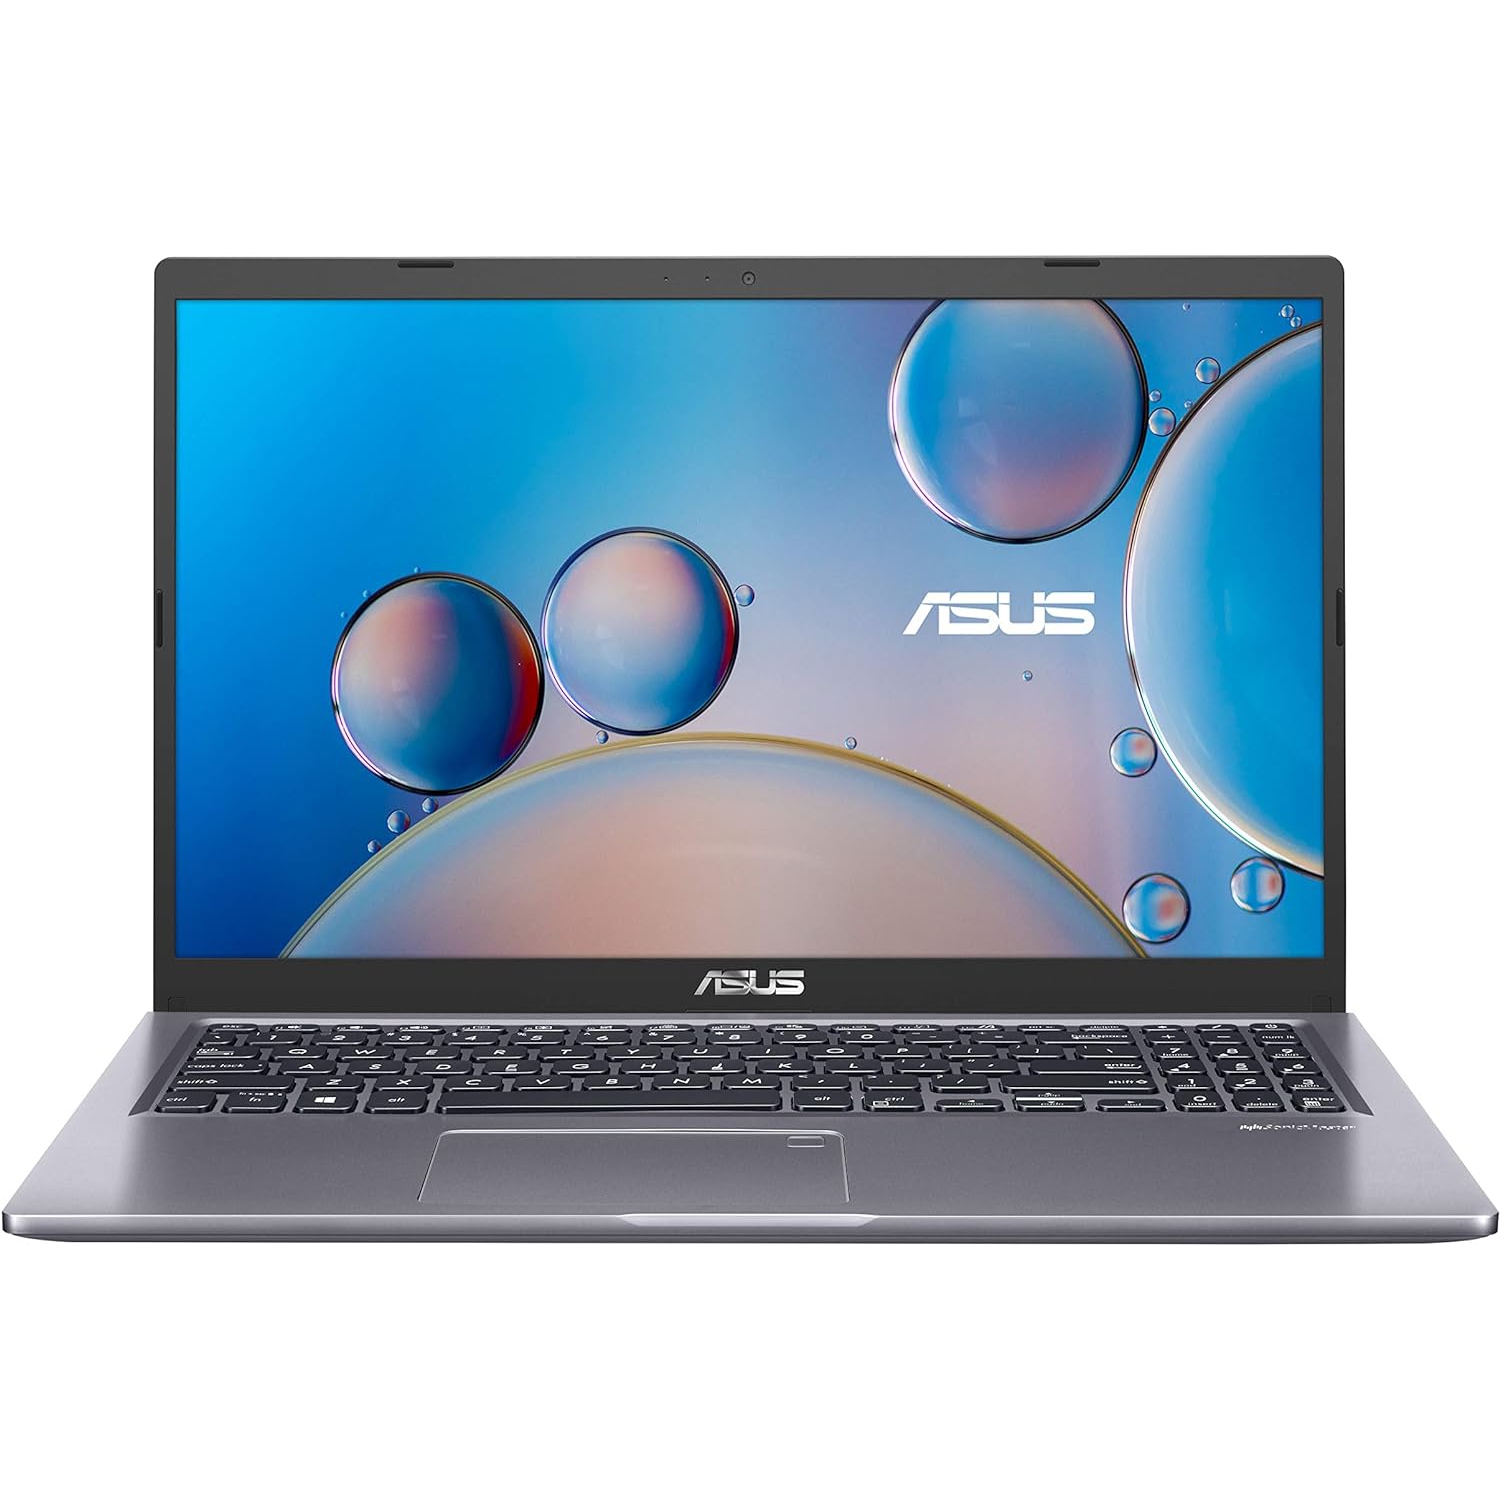 Refurbished (Excellent) - ASUS VivoBook 15 X515 Thin and Light Laptop, 15.6” HD Display,Intel Pentium,4GB RAM,128GB SSD, Windows OS Mode, X515MA-AH09-CA